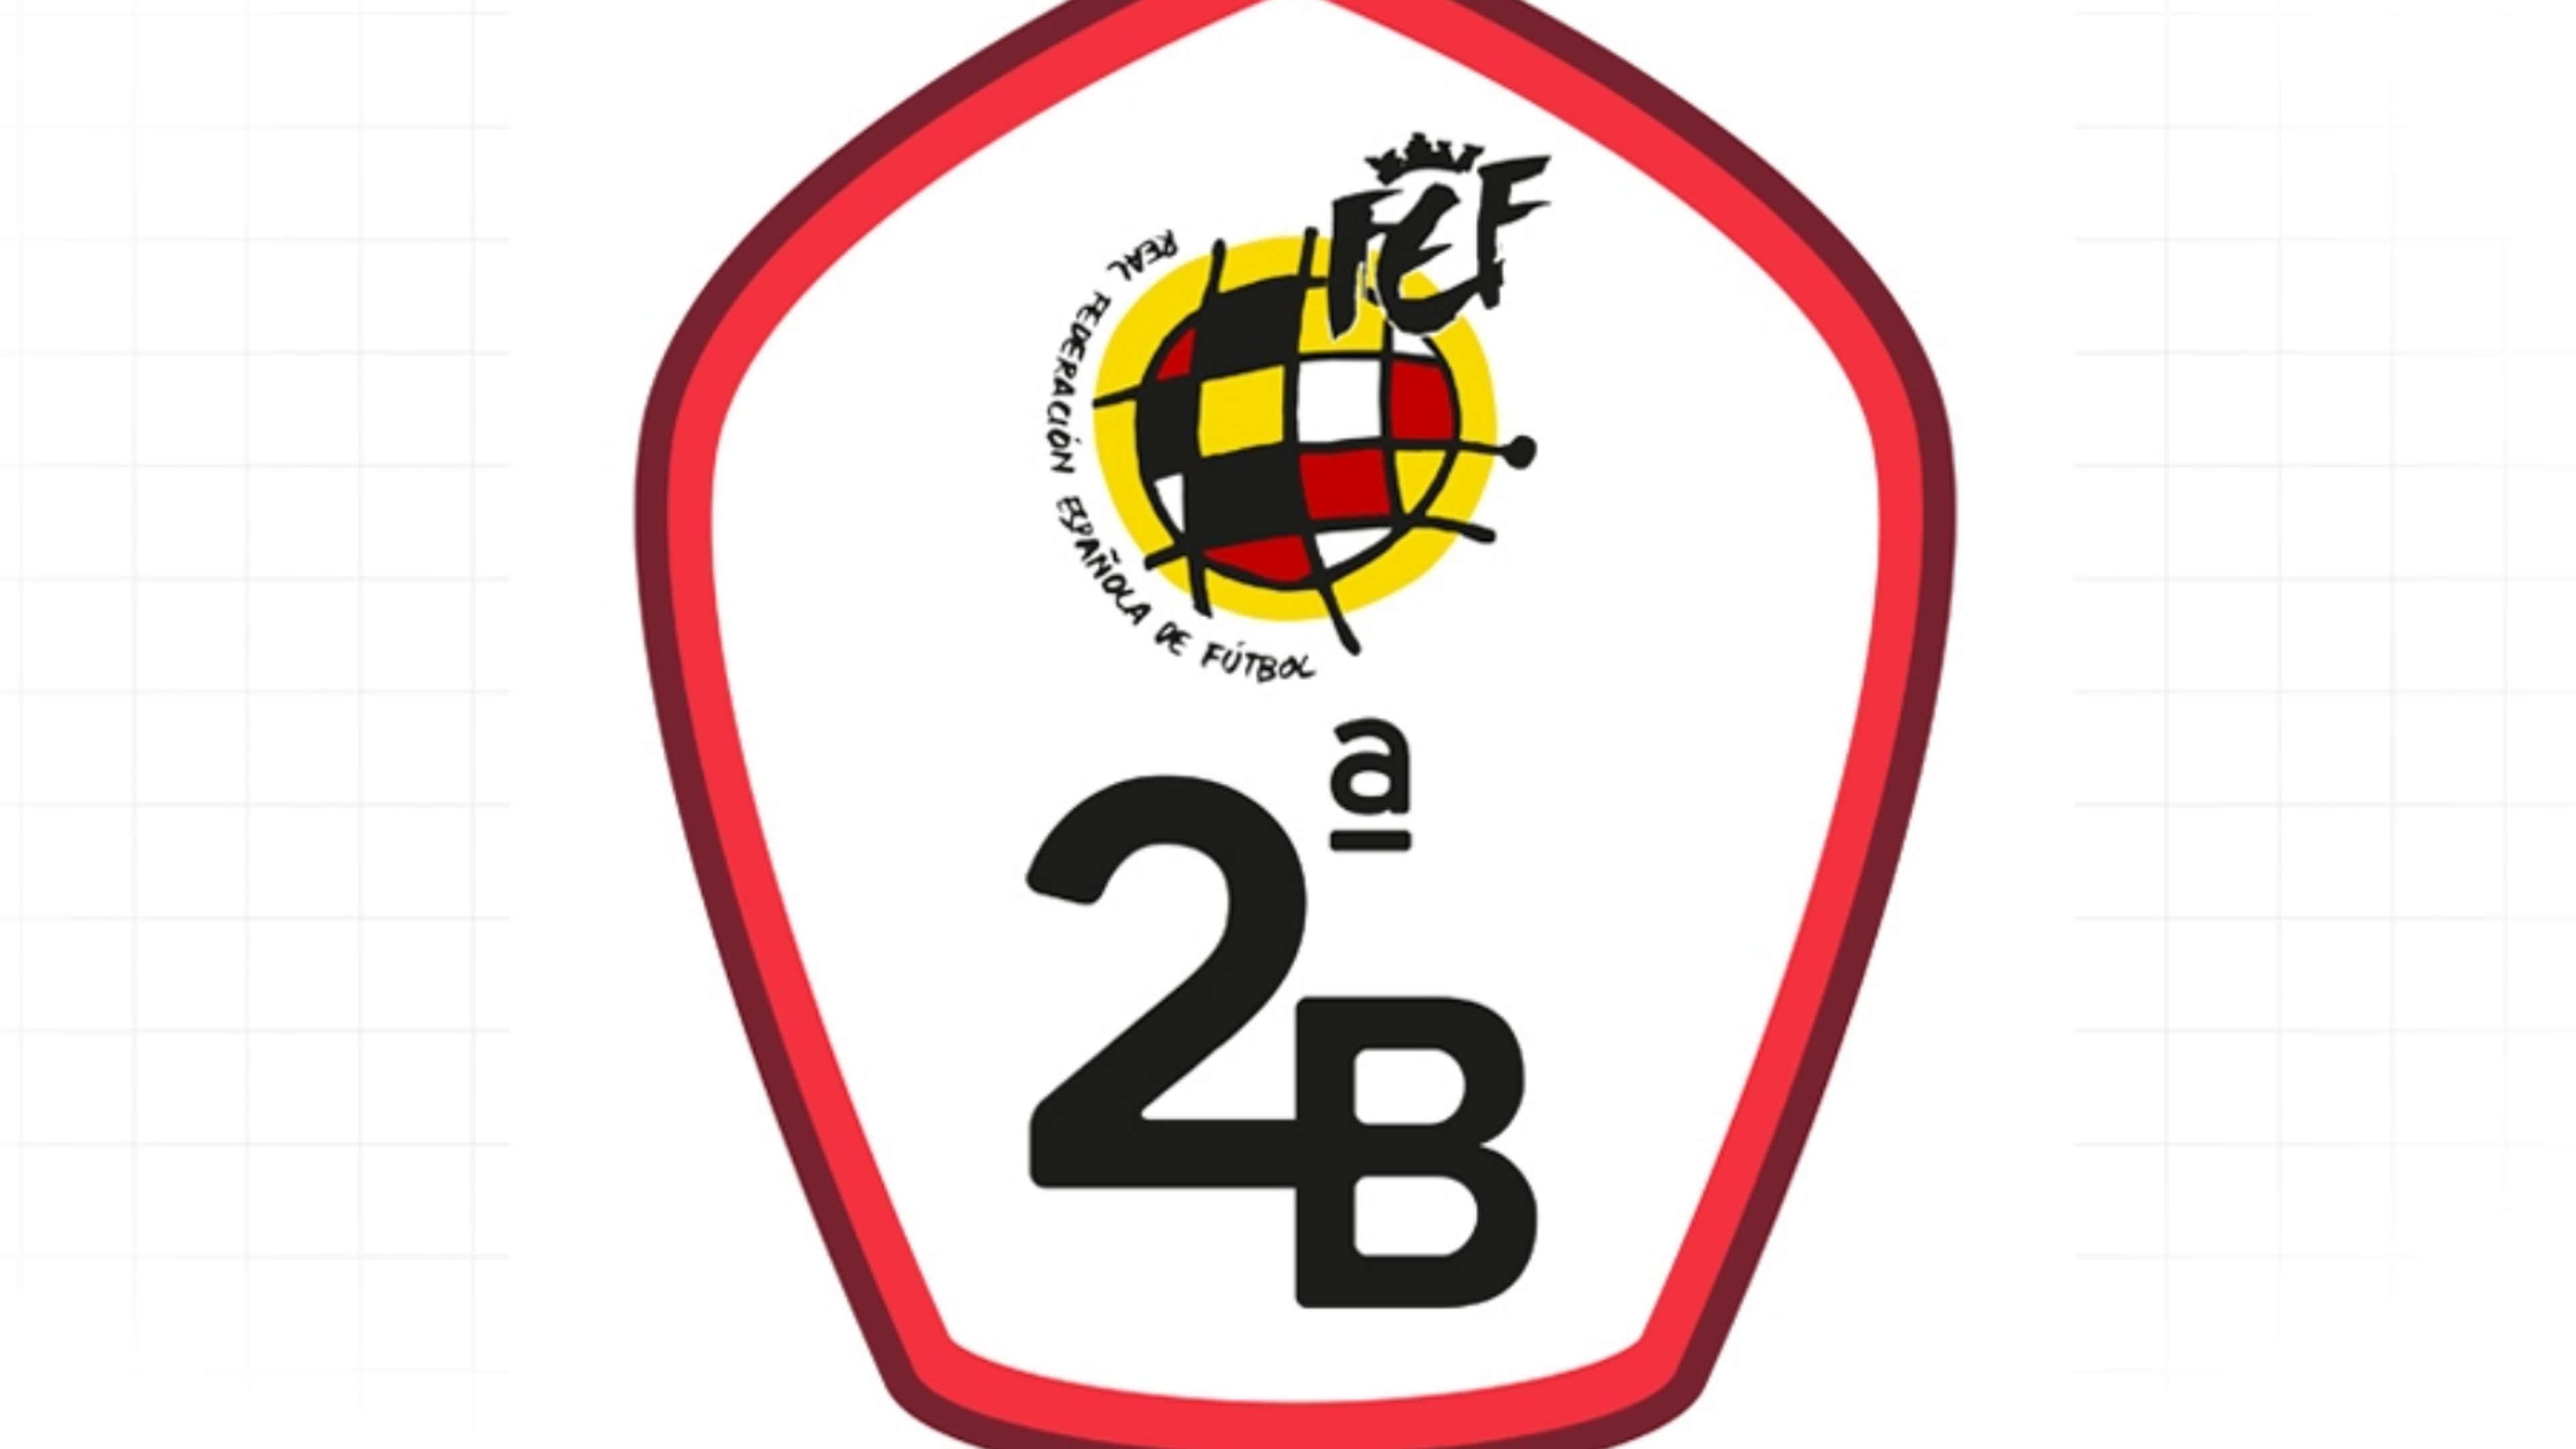 Segunda division b grupo 2